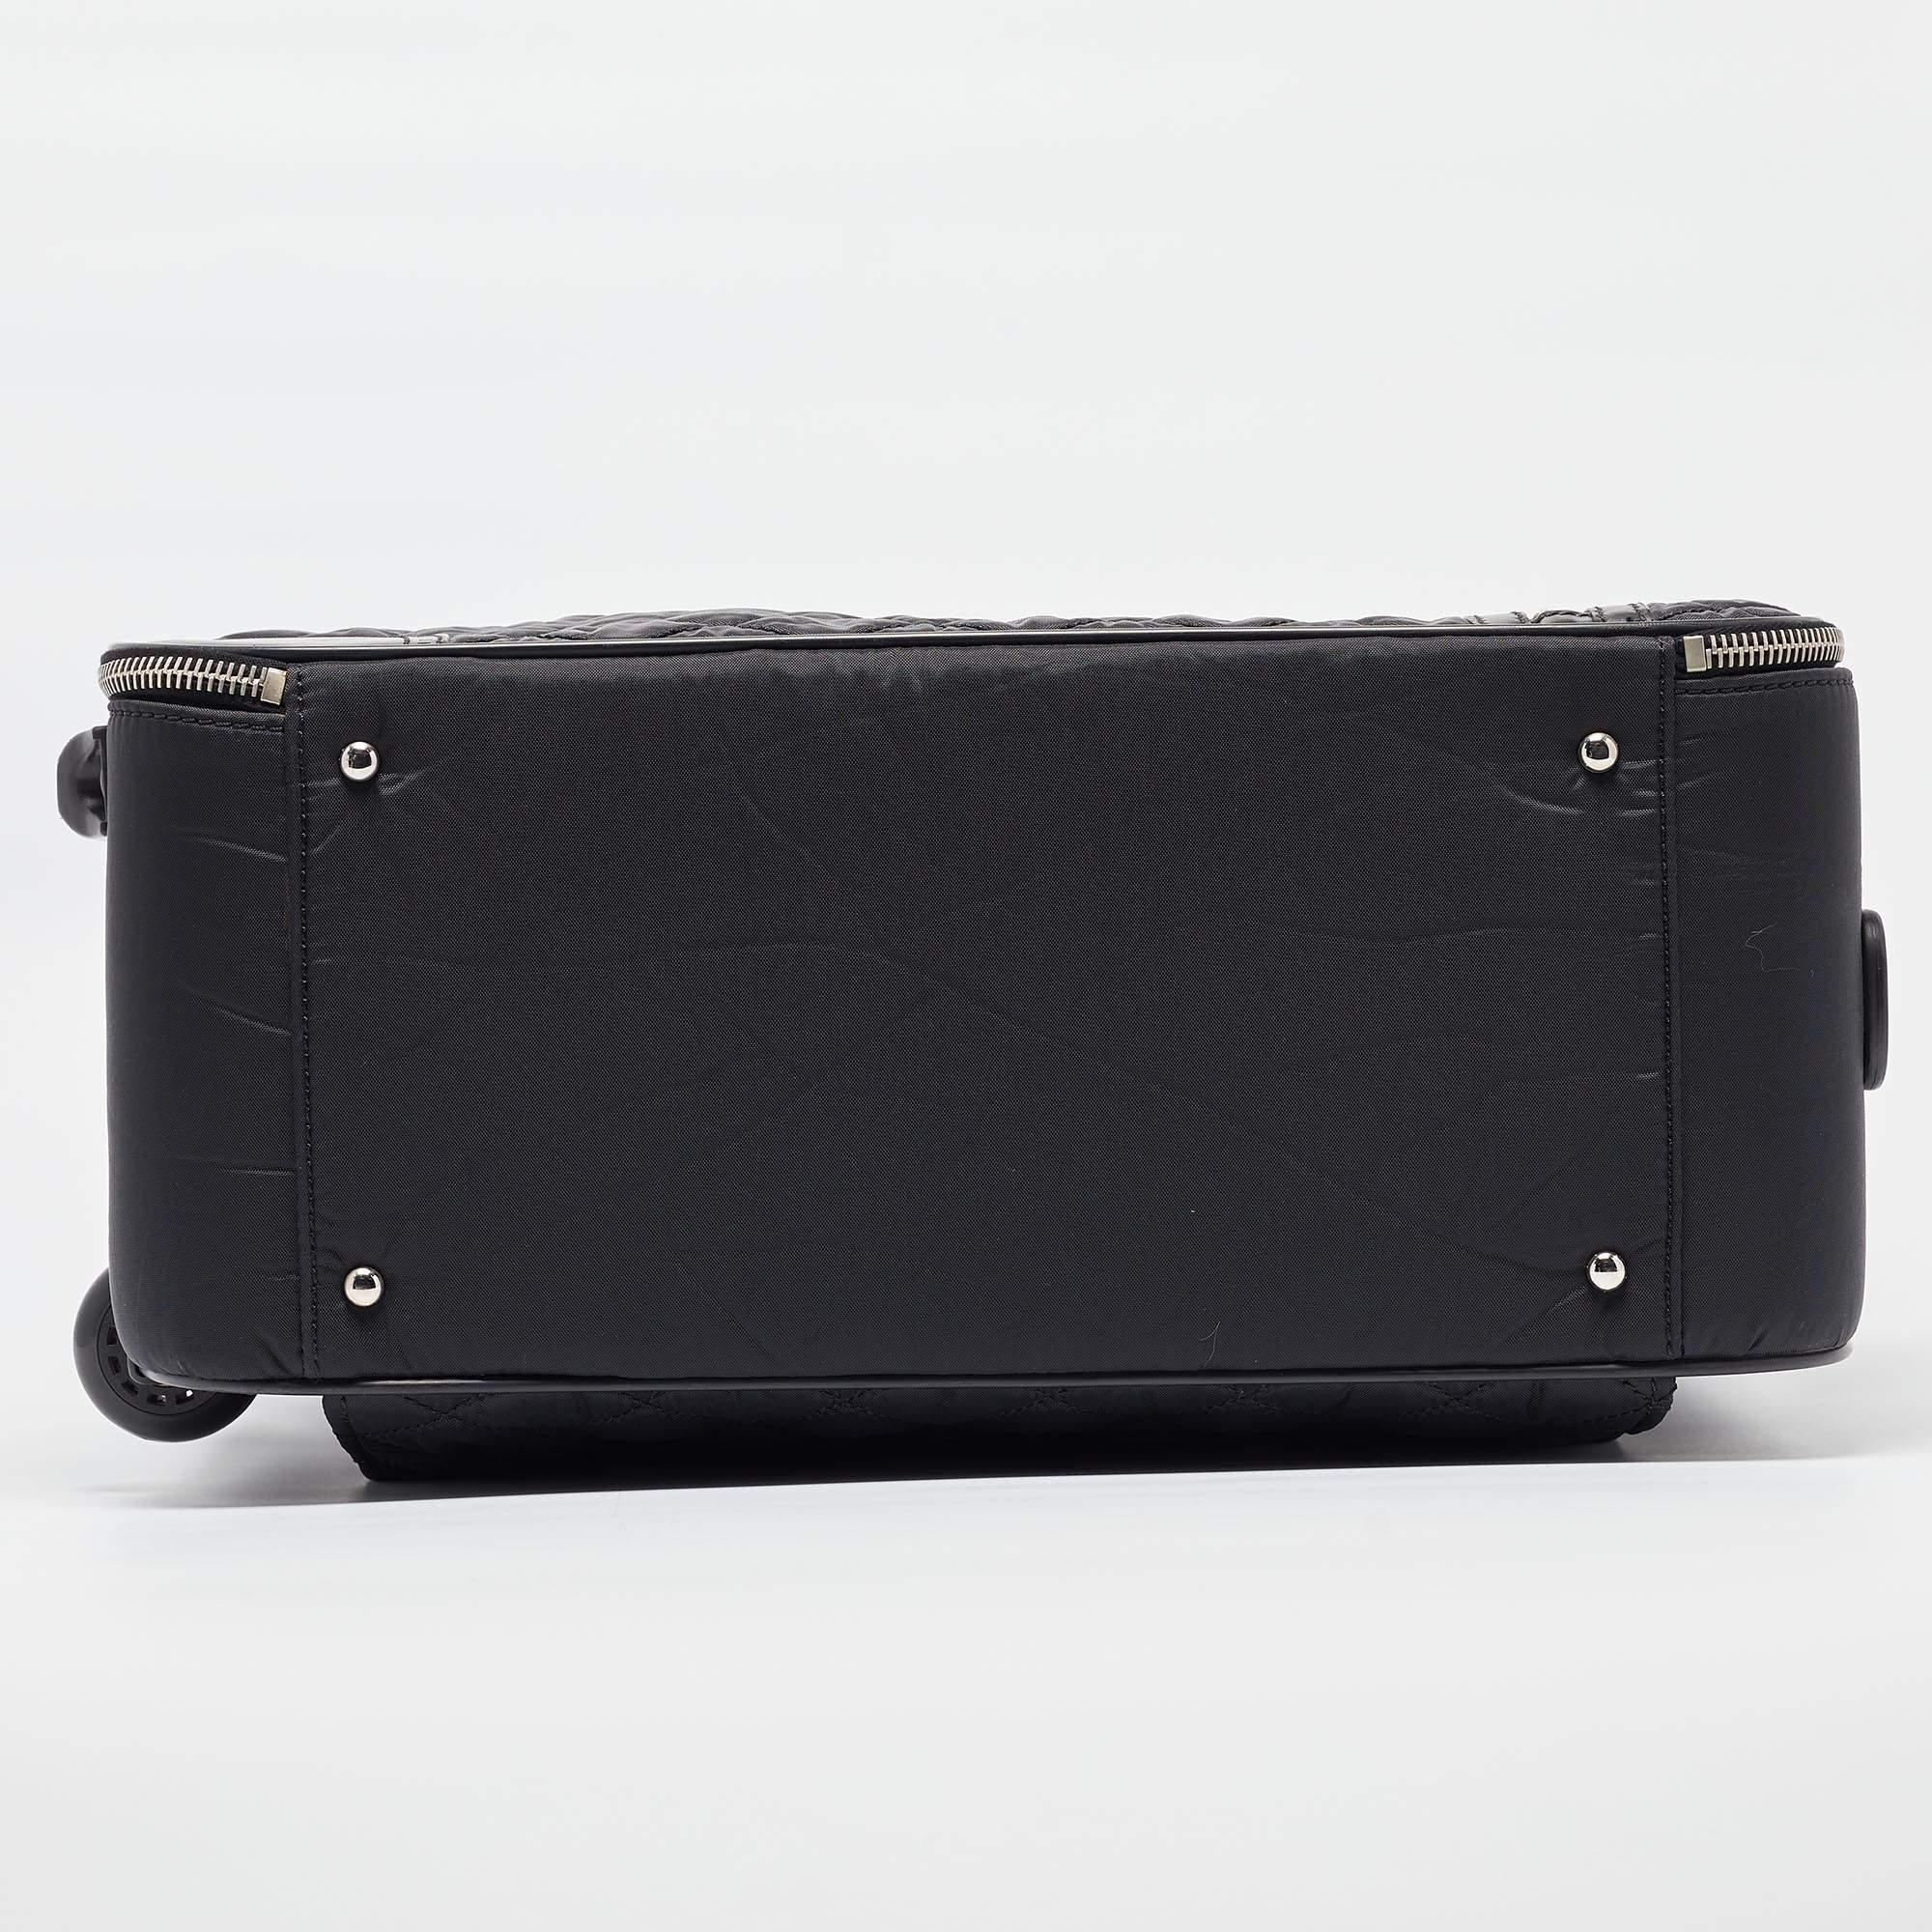 Chanel Black Quilted Nylon 2 Wheeled CC Luggage (Bagages à 2 roues en nylon matelassé) 1